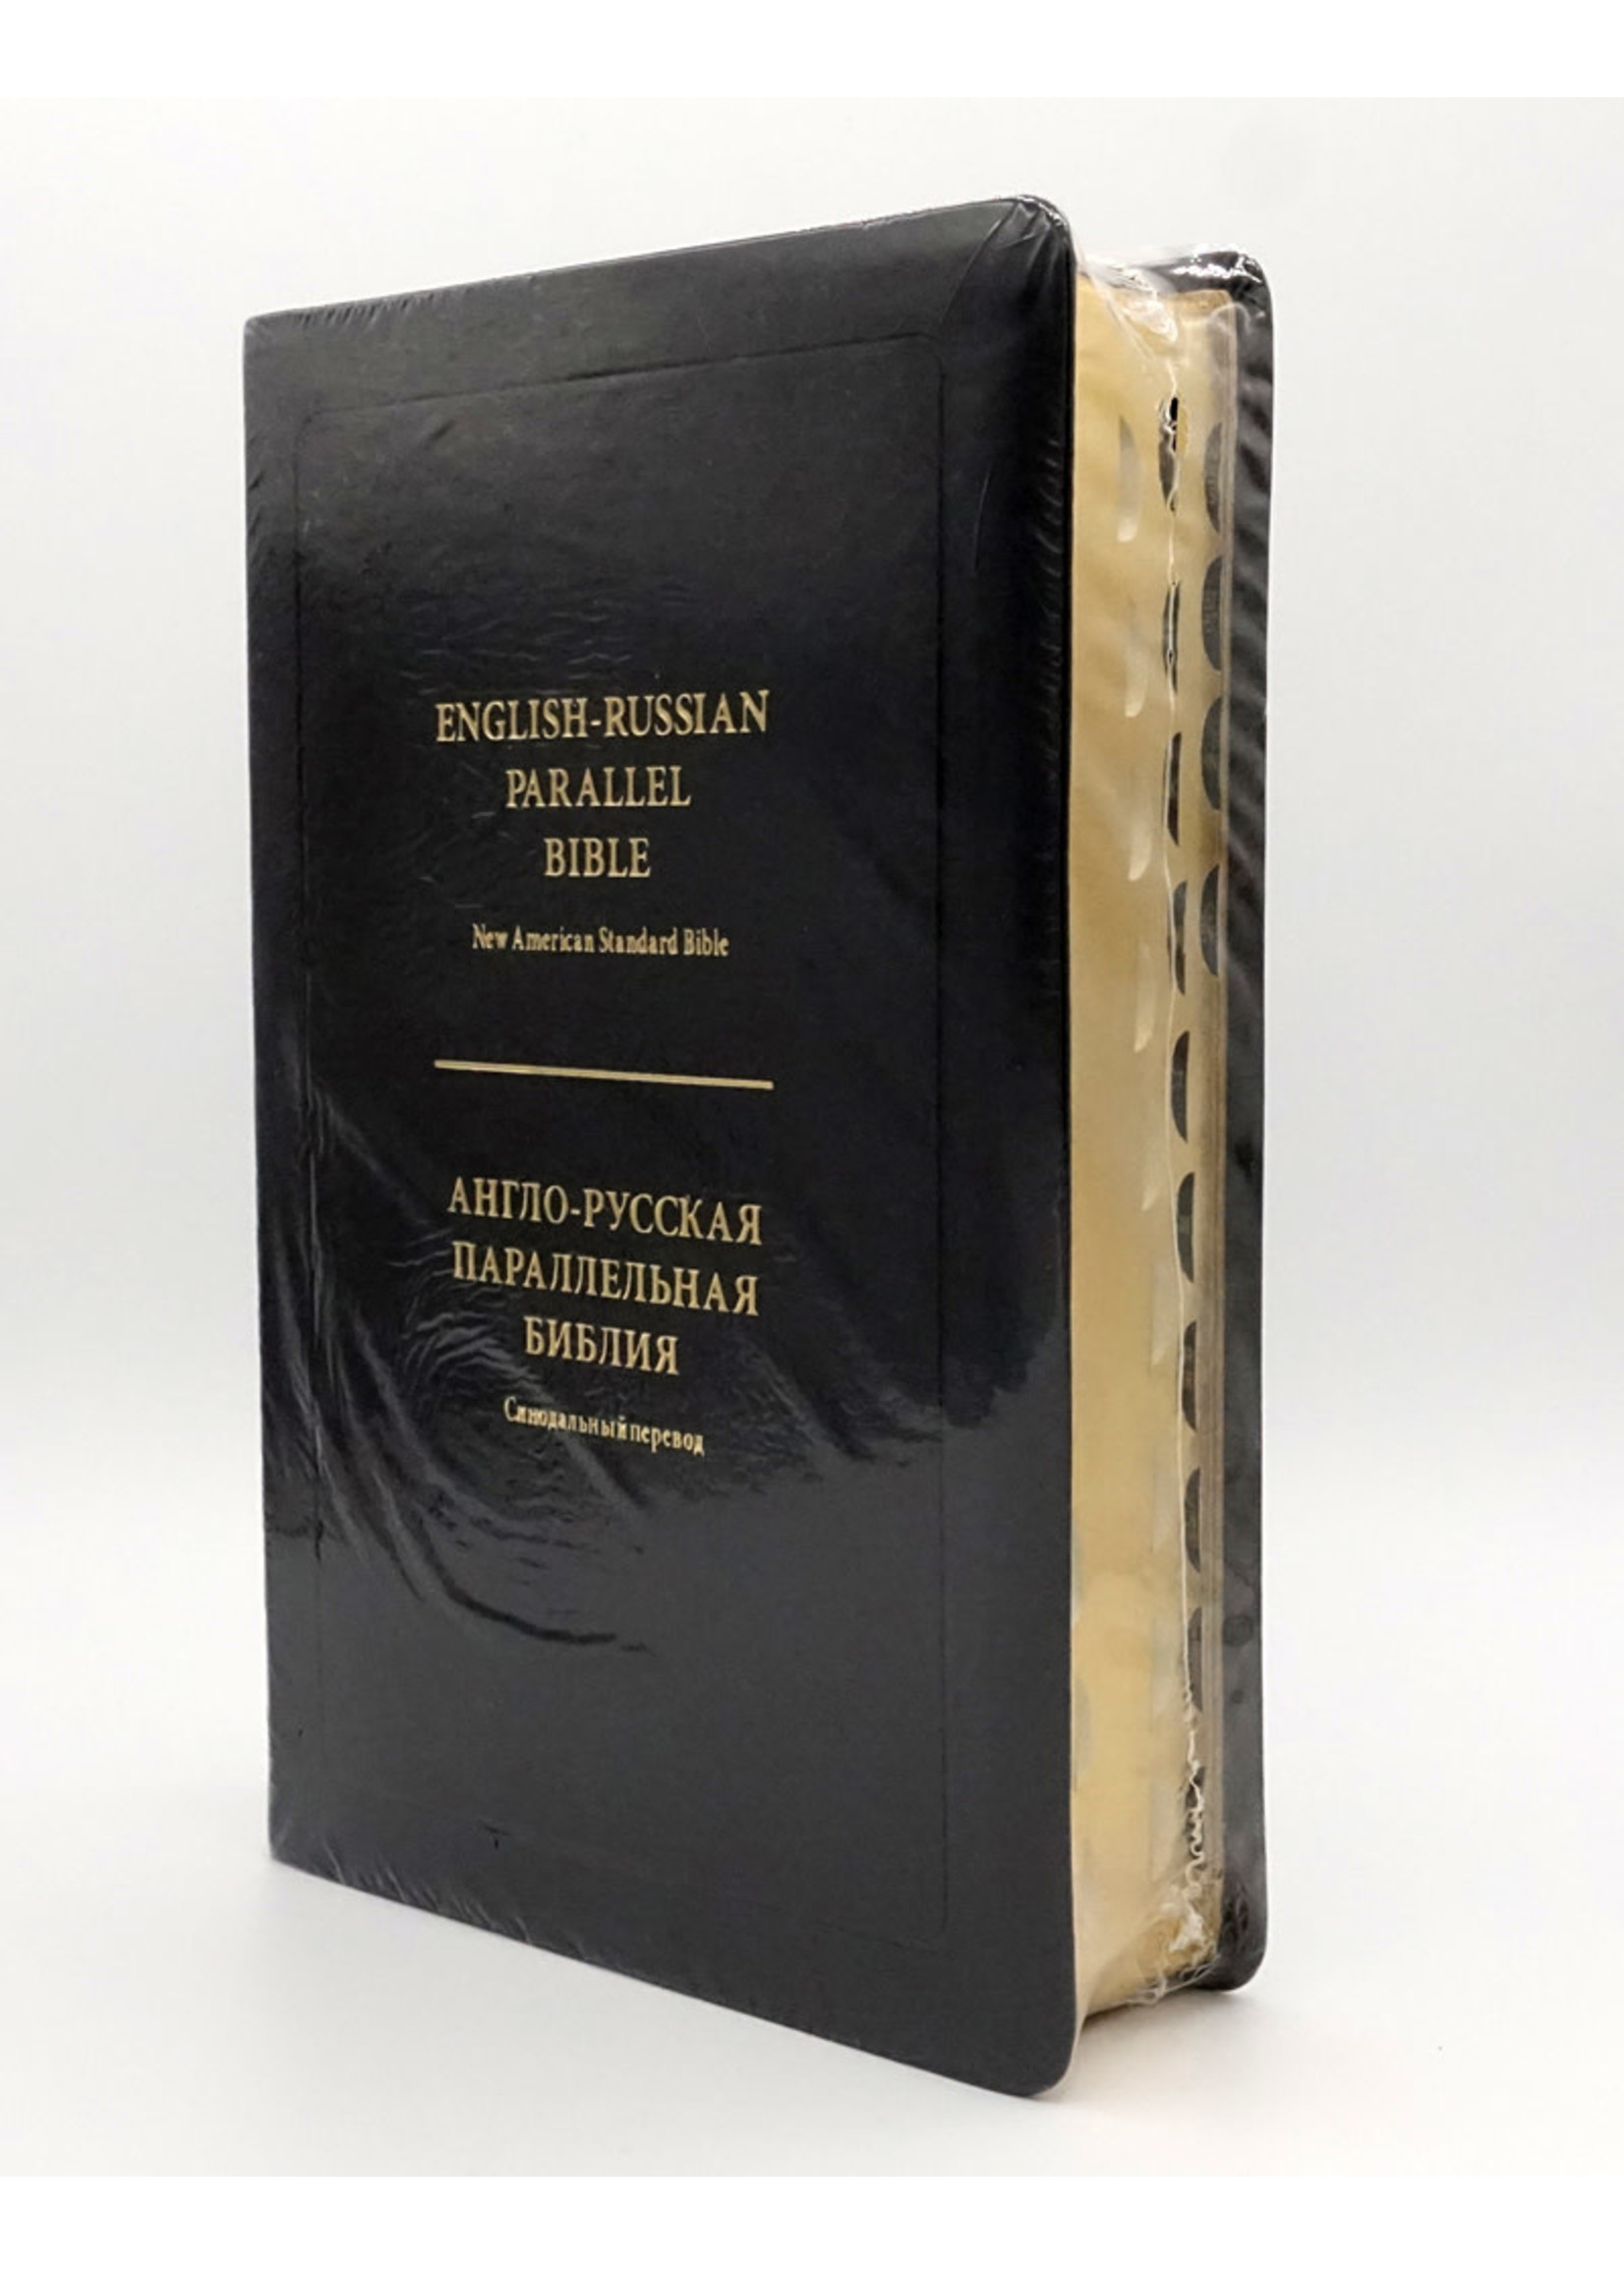 English-Russian Parallel Bible (NASB-SYNO), Index, Medium, Black